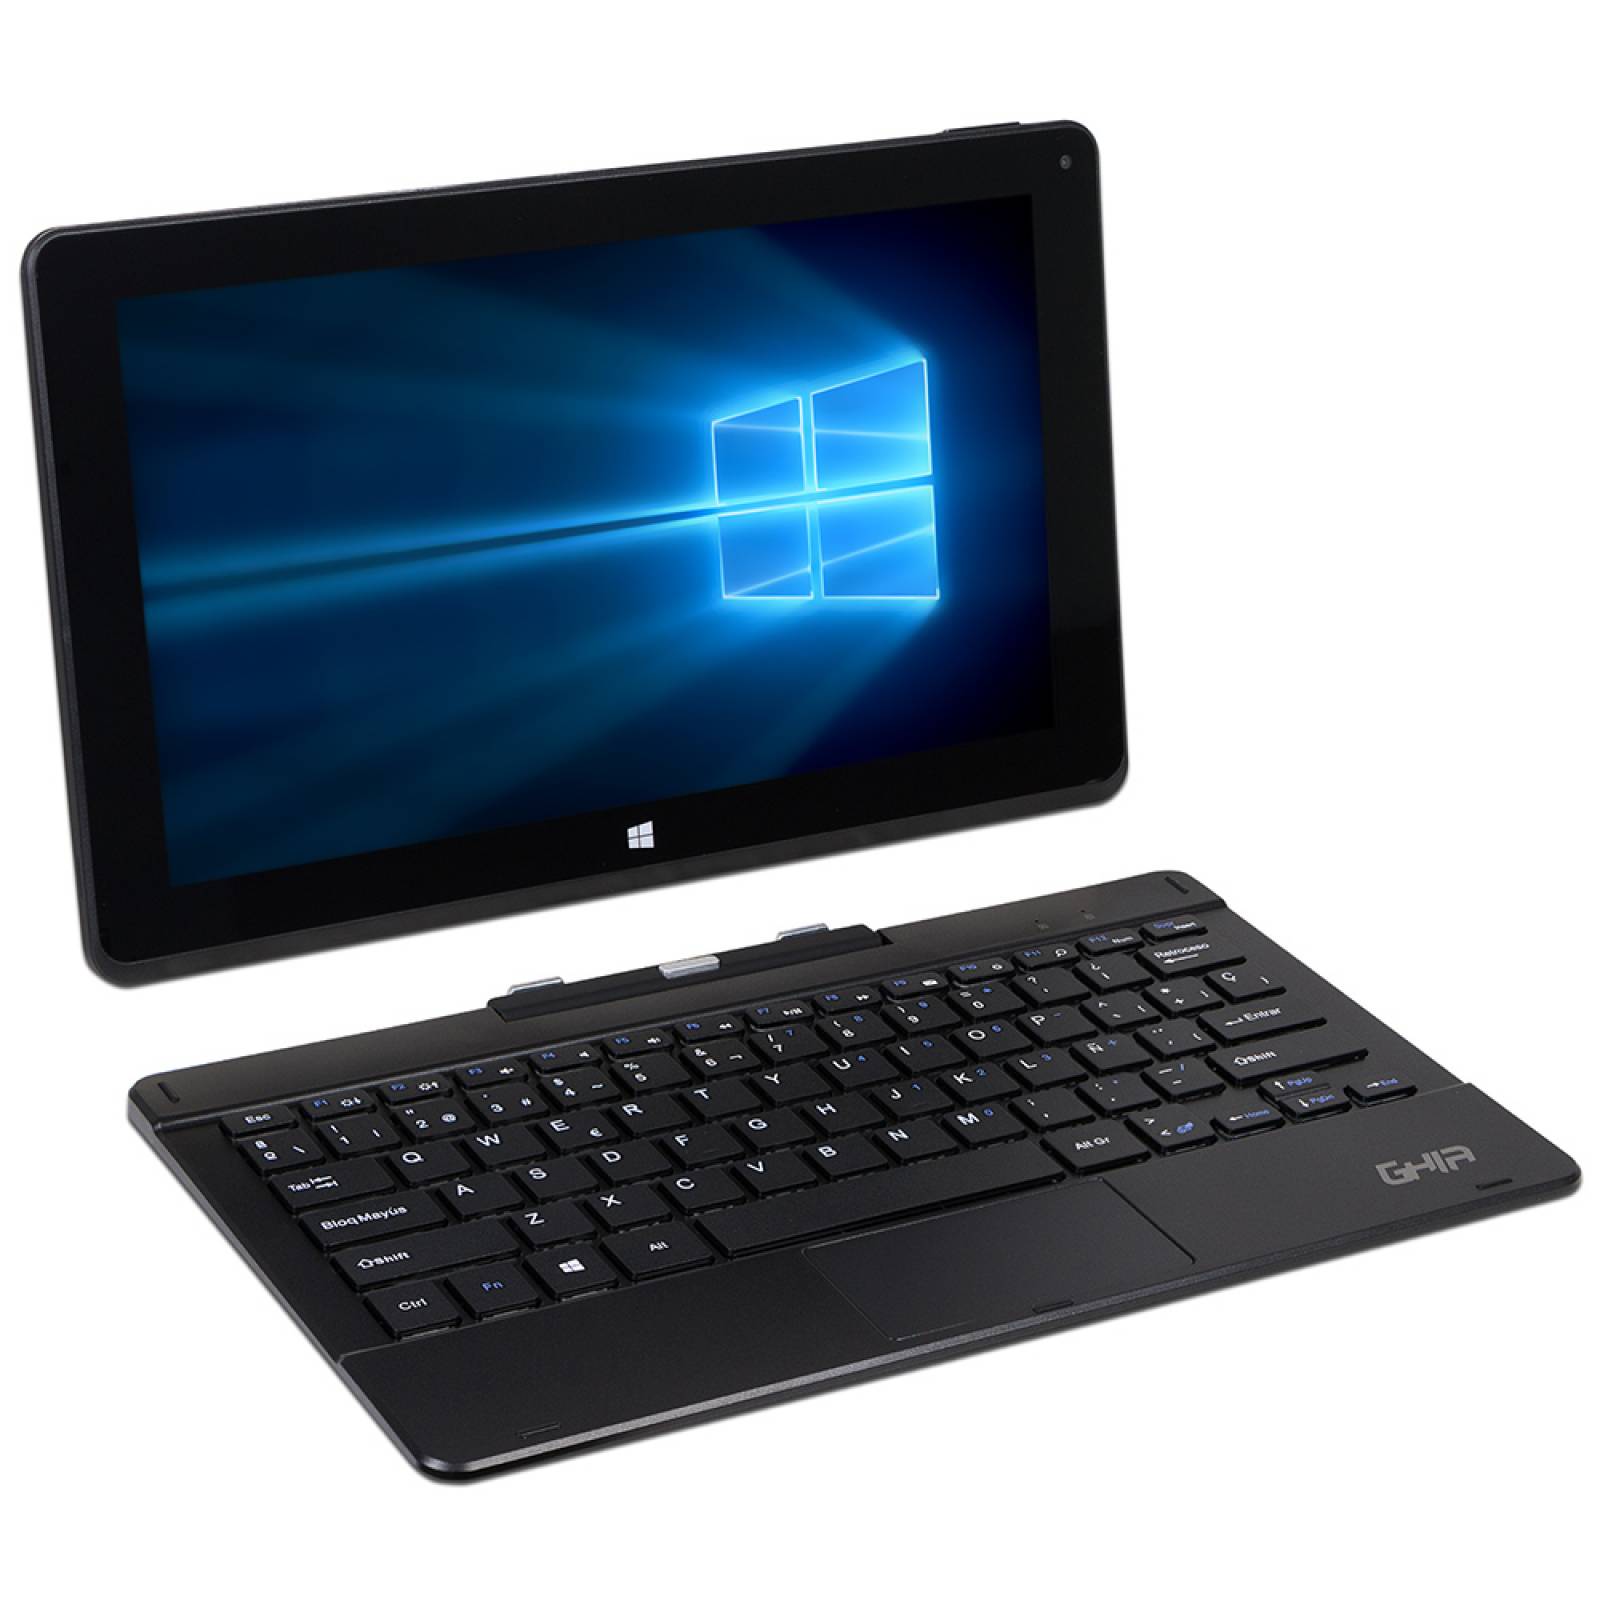 Laptop 2 en 1 GHIA Blaze: Procesador Intel Atom Z8350 Memoria de 2GB LPDDR3 Almacenamiento de 32GB Pantalla de 11.6 pulgadas LED Multi Touch Video Intel HD Graphics S.O. Windows 10 Home